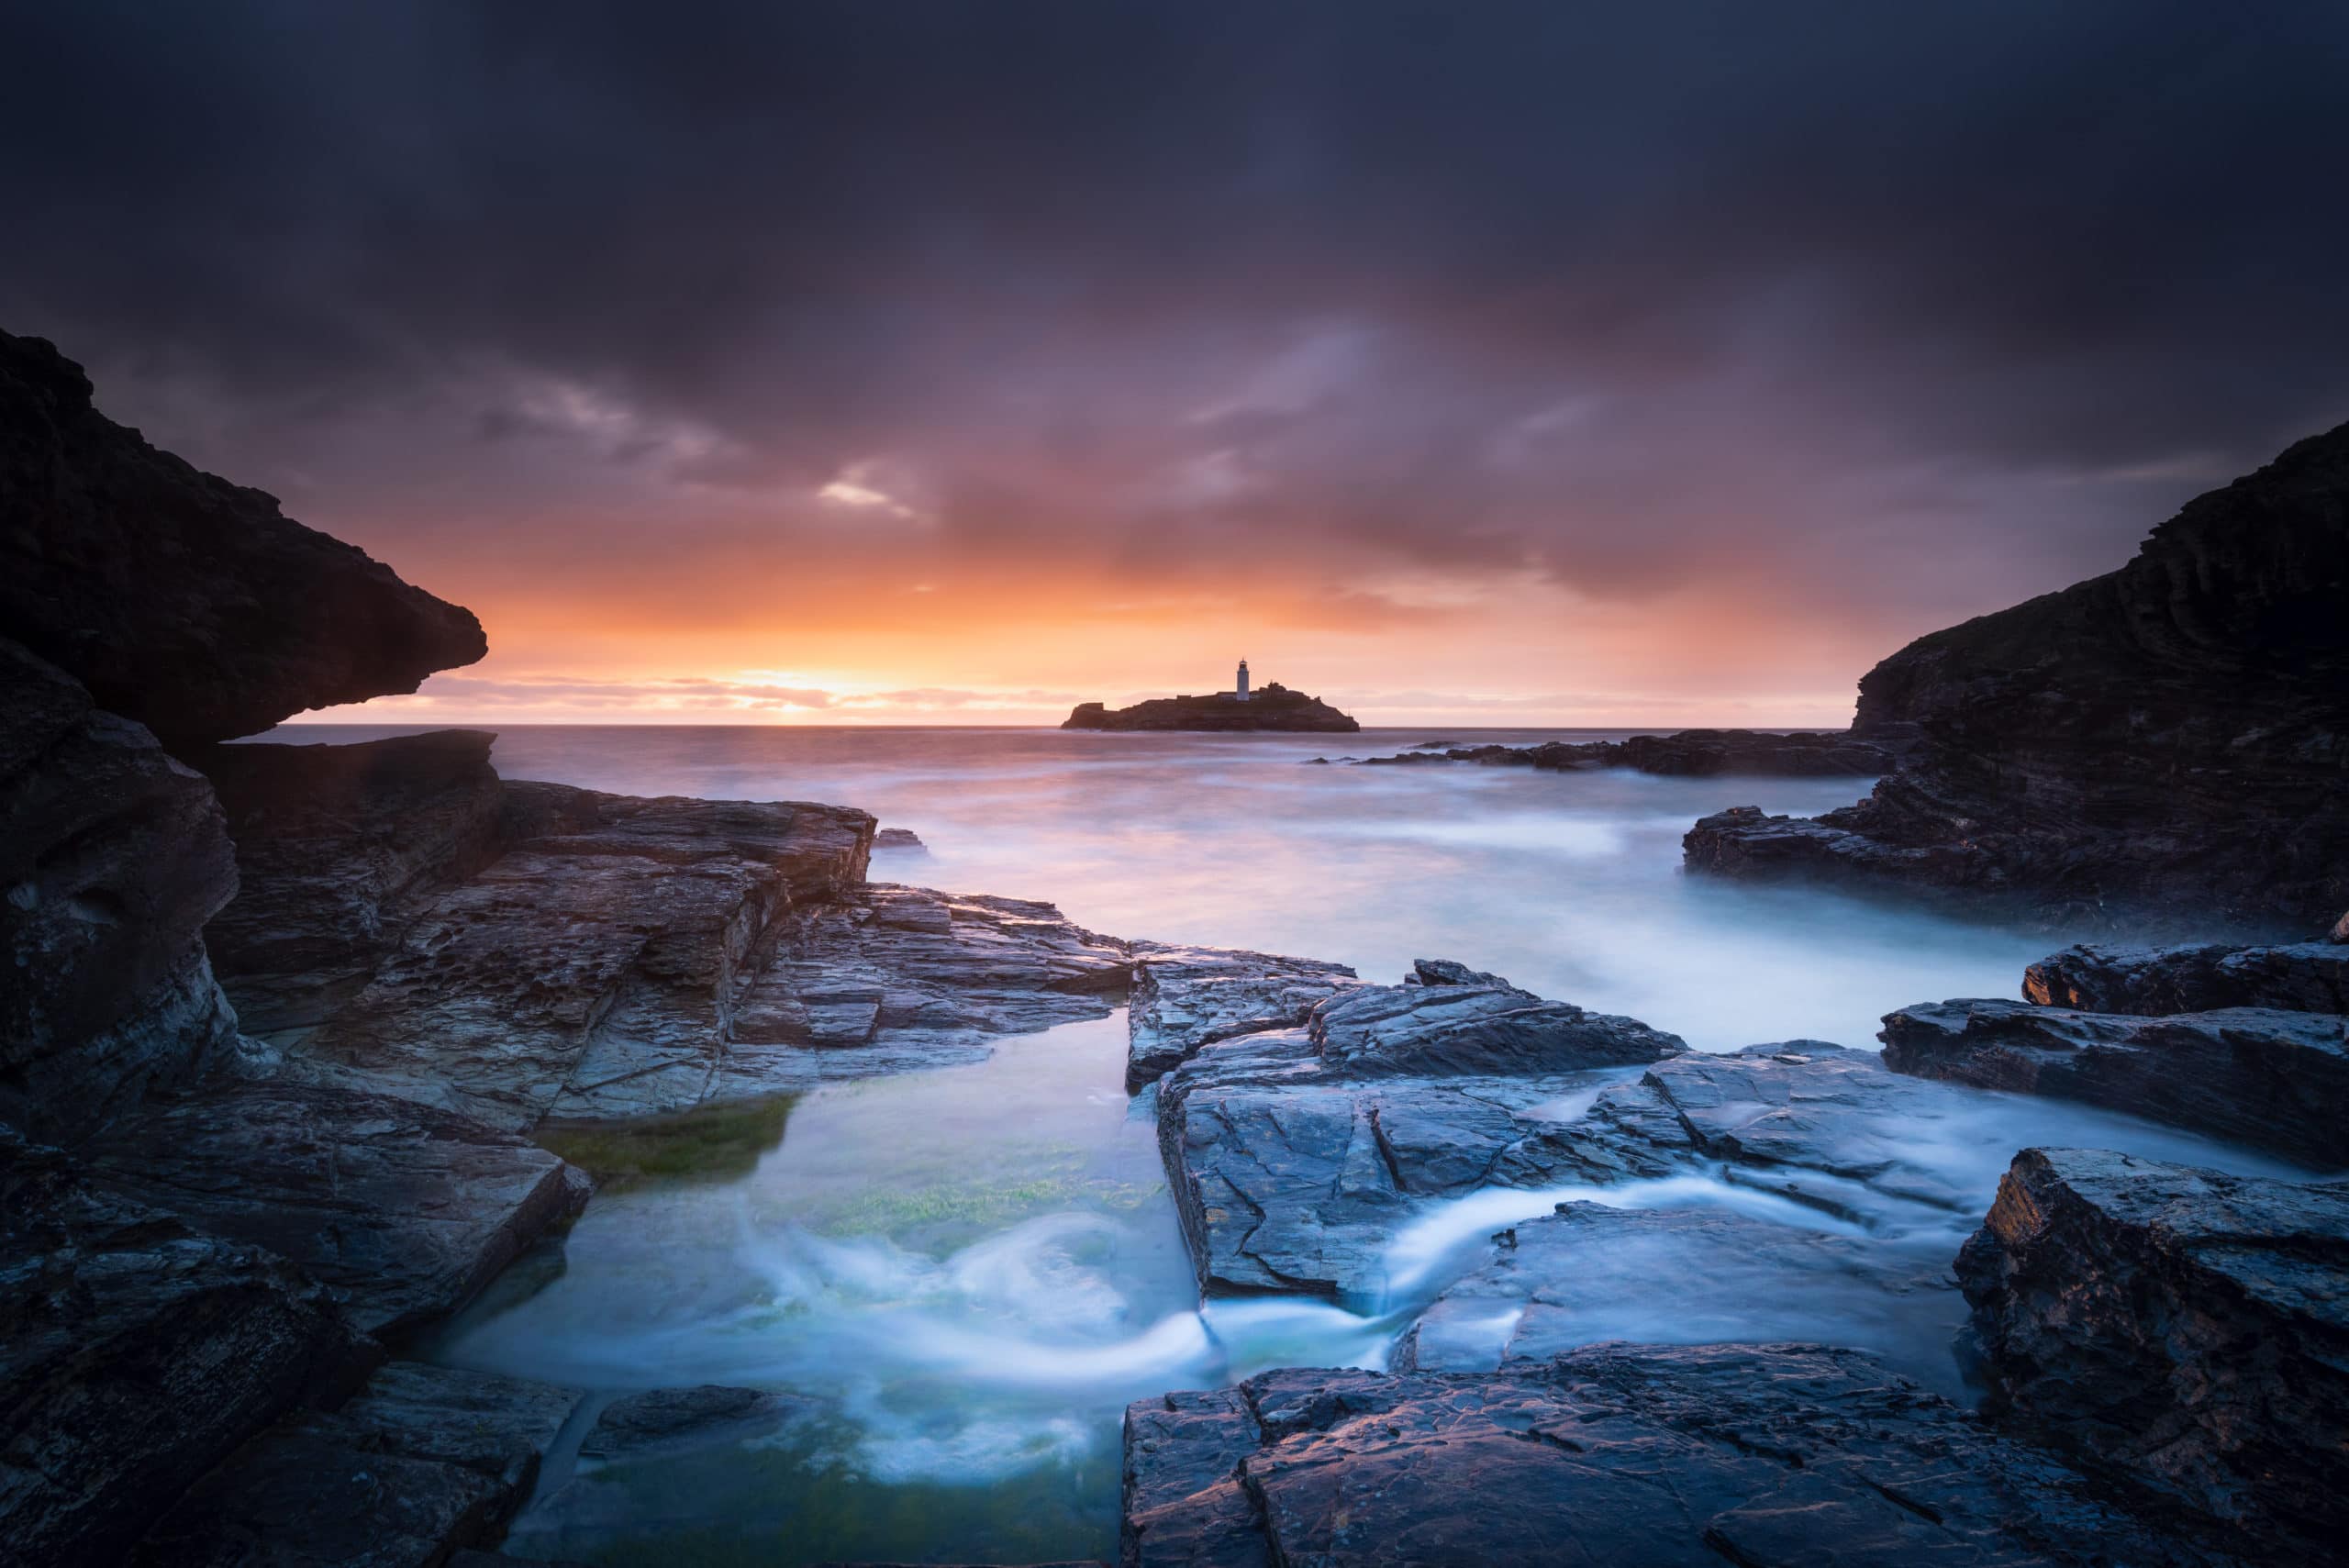 Sunset at spring tide, Godrevy Lighthouse, Cornwall